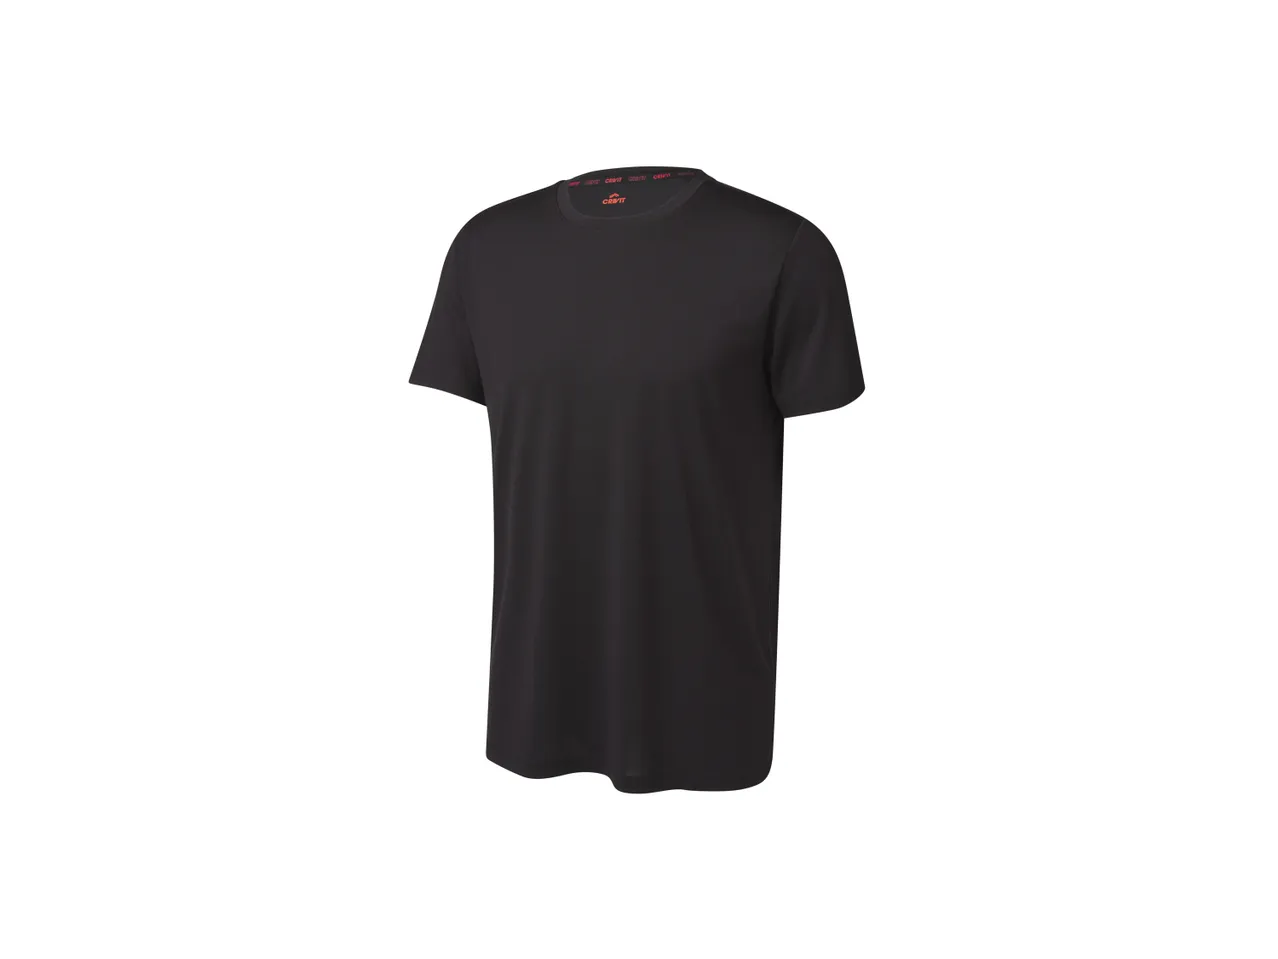 T-shirt sportiva da uomo , prezzo 4.99 EUR 
T-shirt sportiva da uomo Misure: S-XL ...